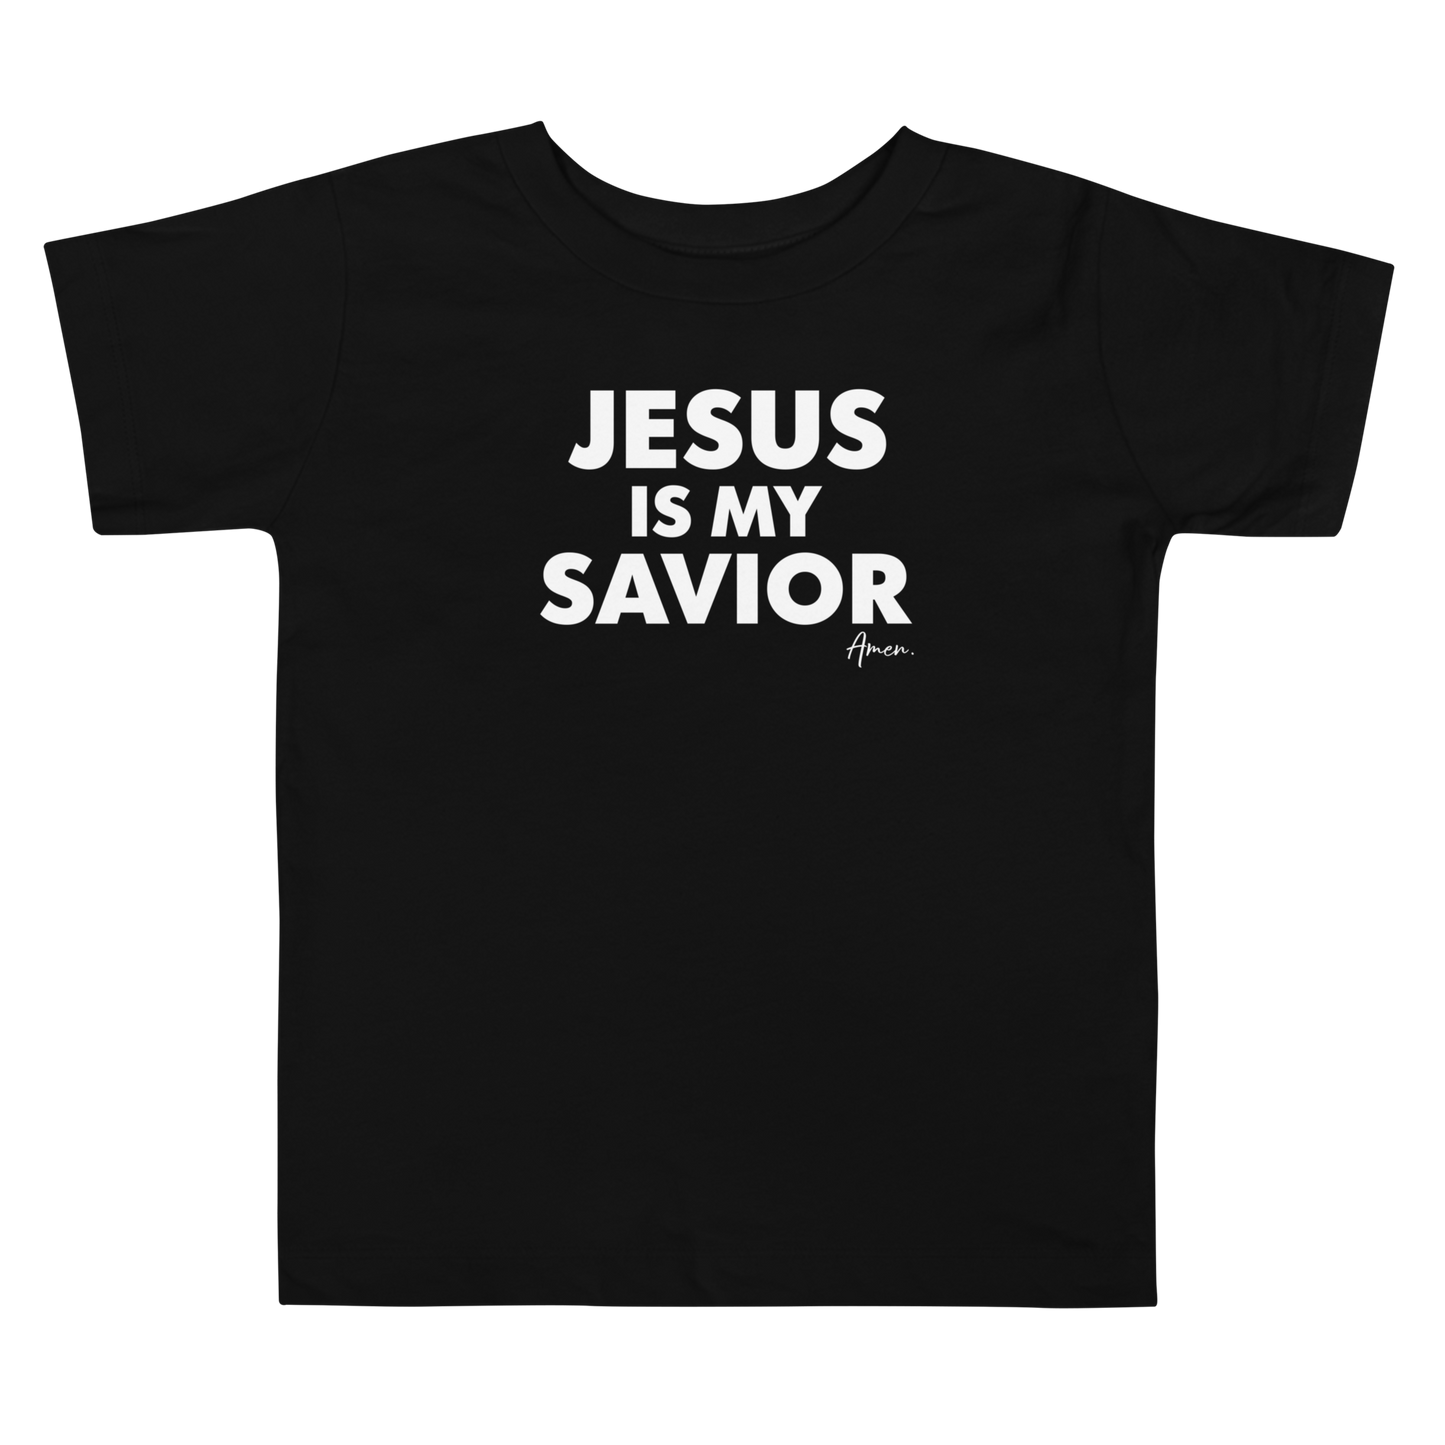 Jesus is my Savior - Toddler Short Sleeve Tee